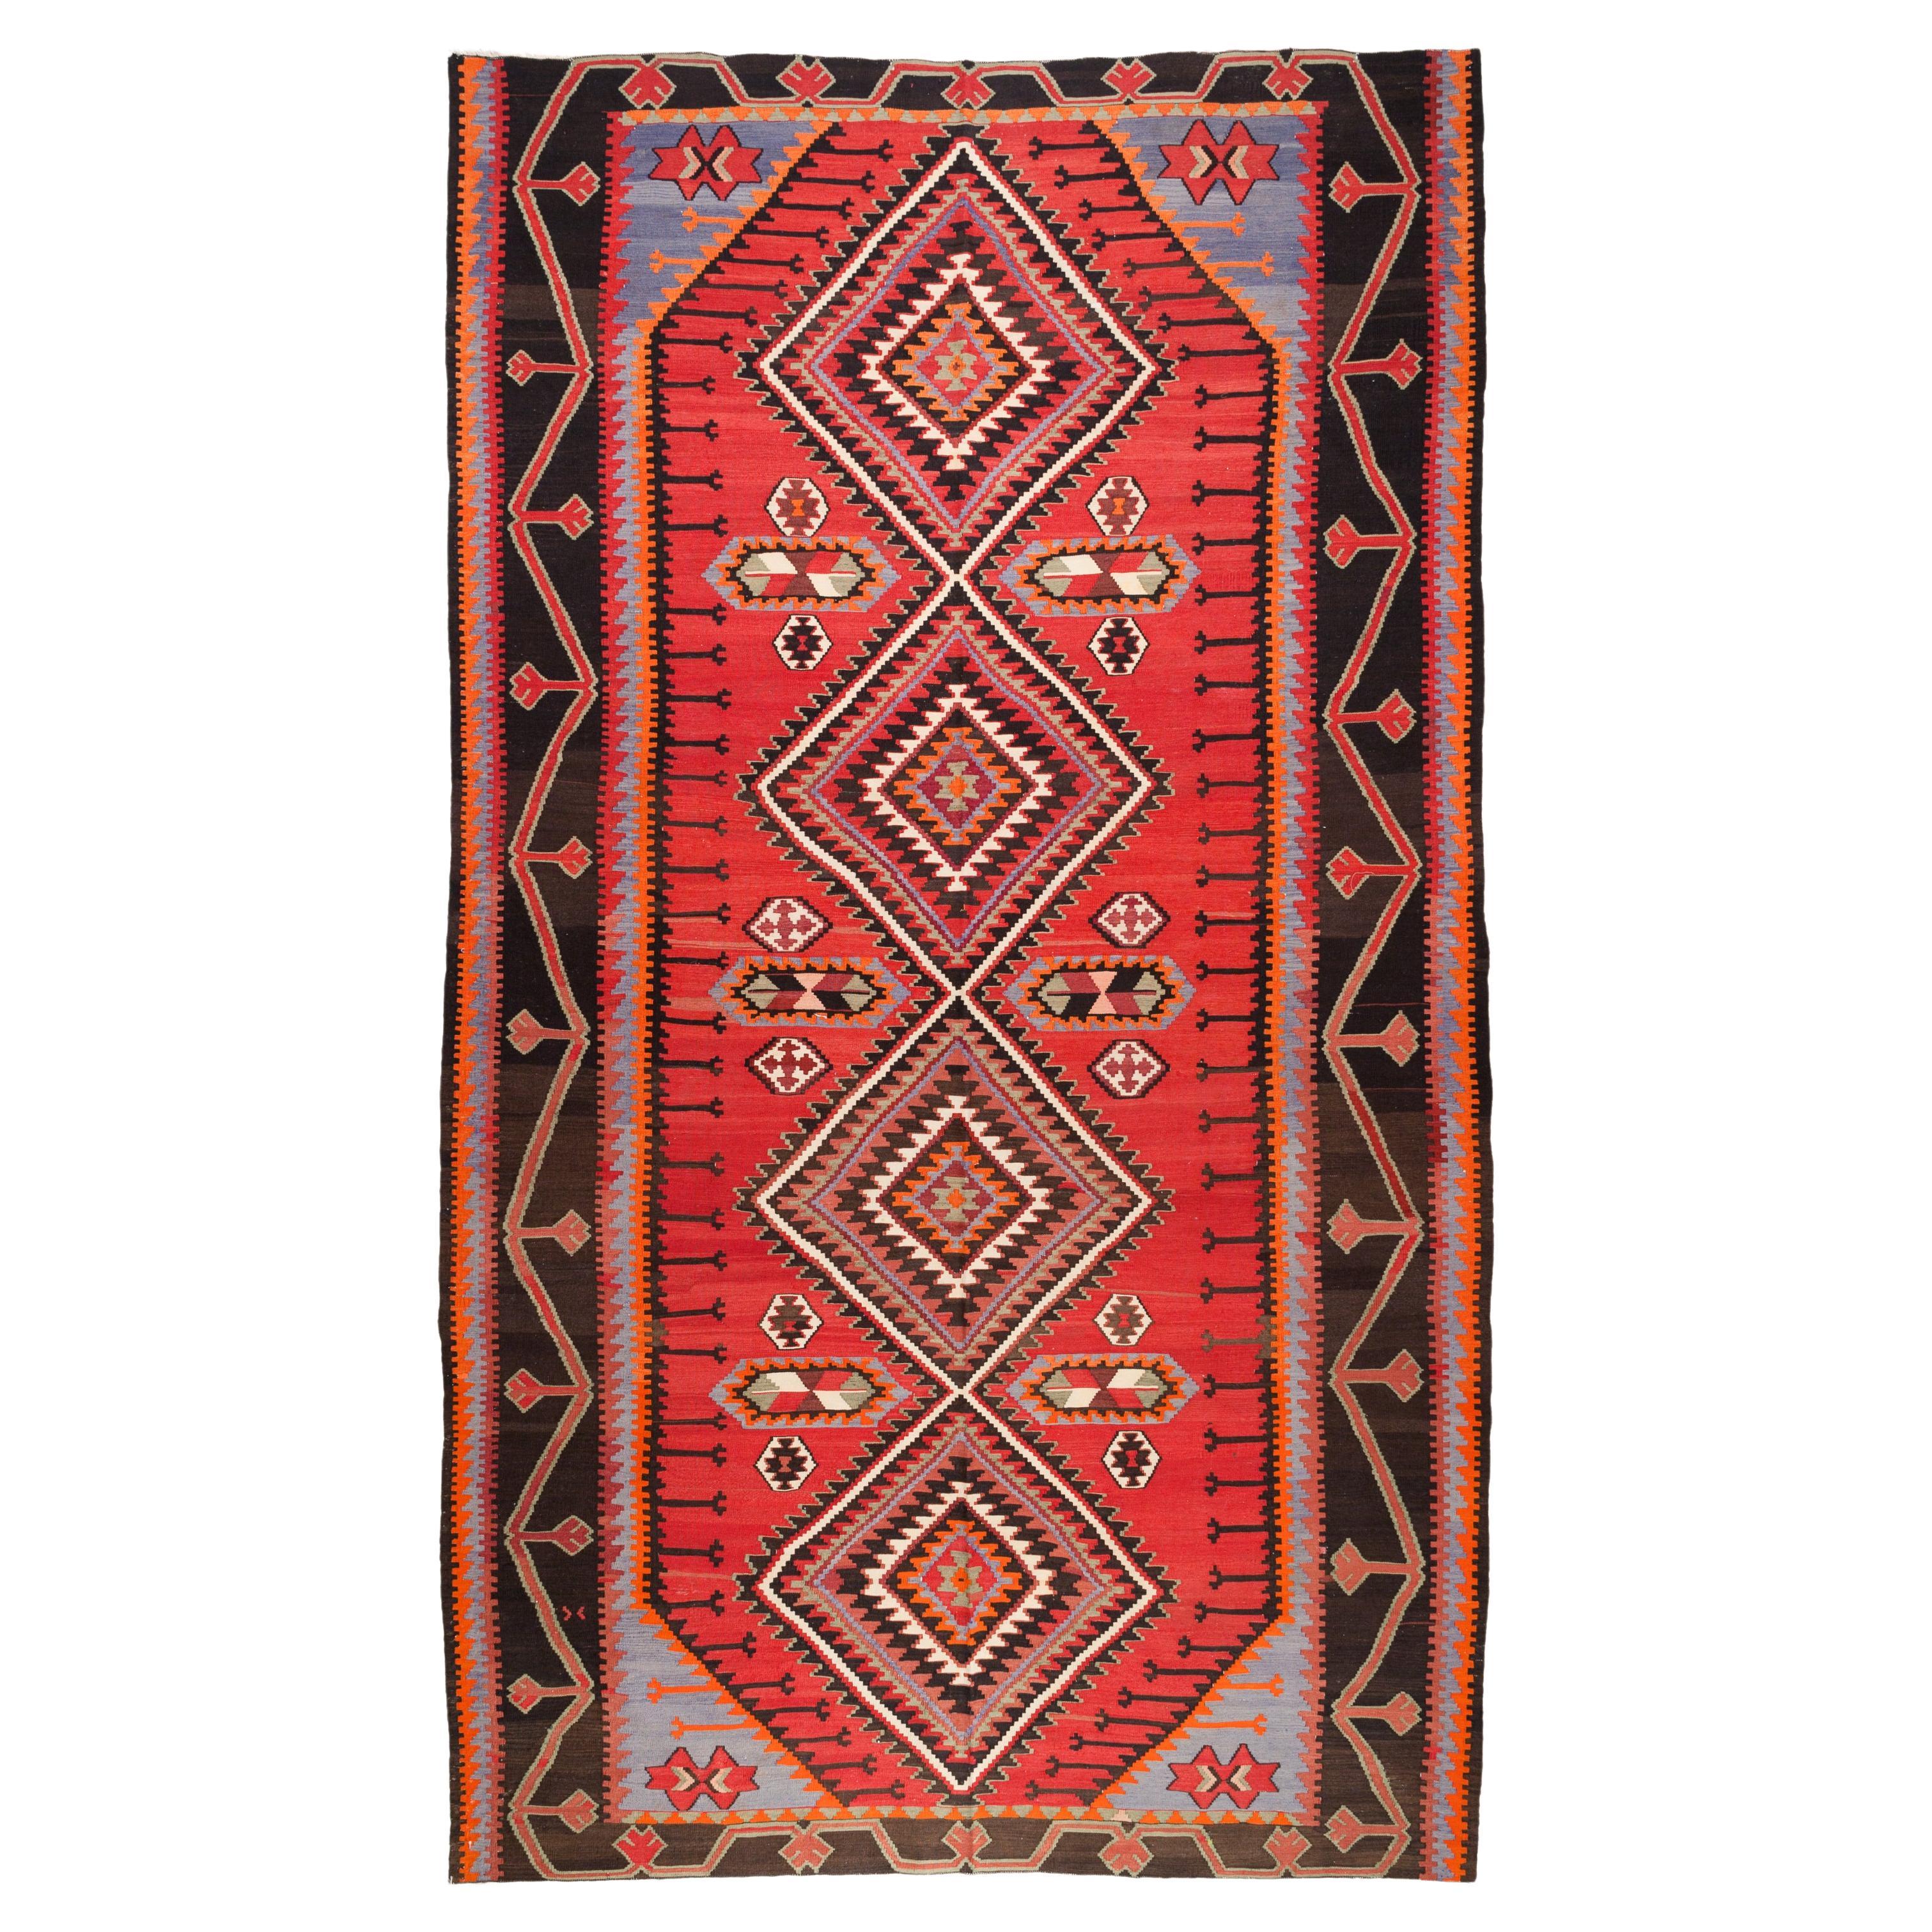 Old Kuba Fine Kilim Rug, Caucasian Carpet